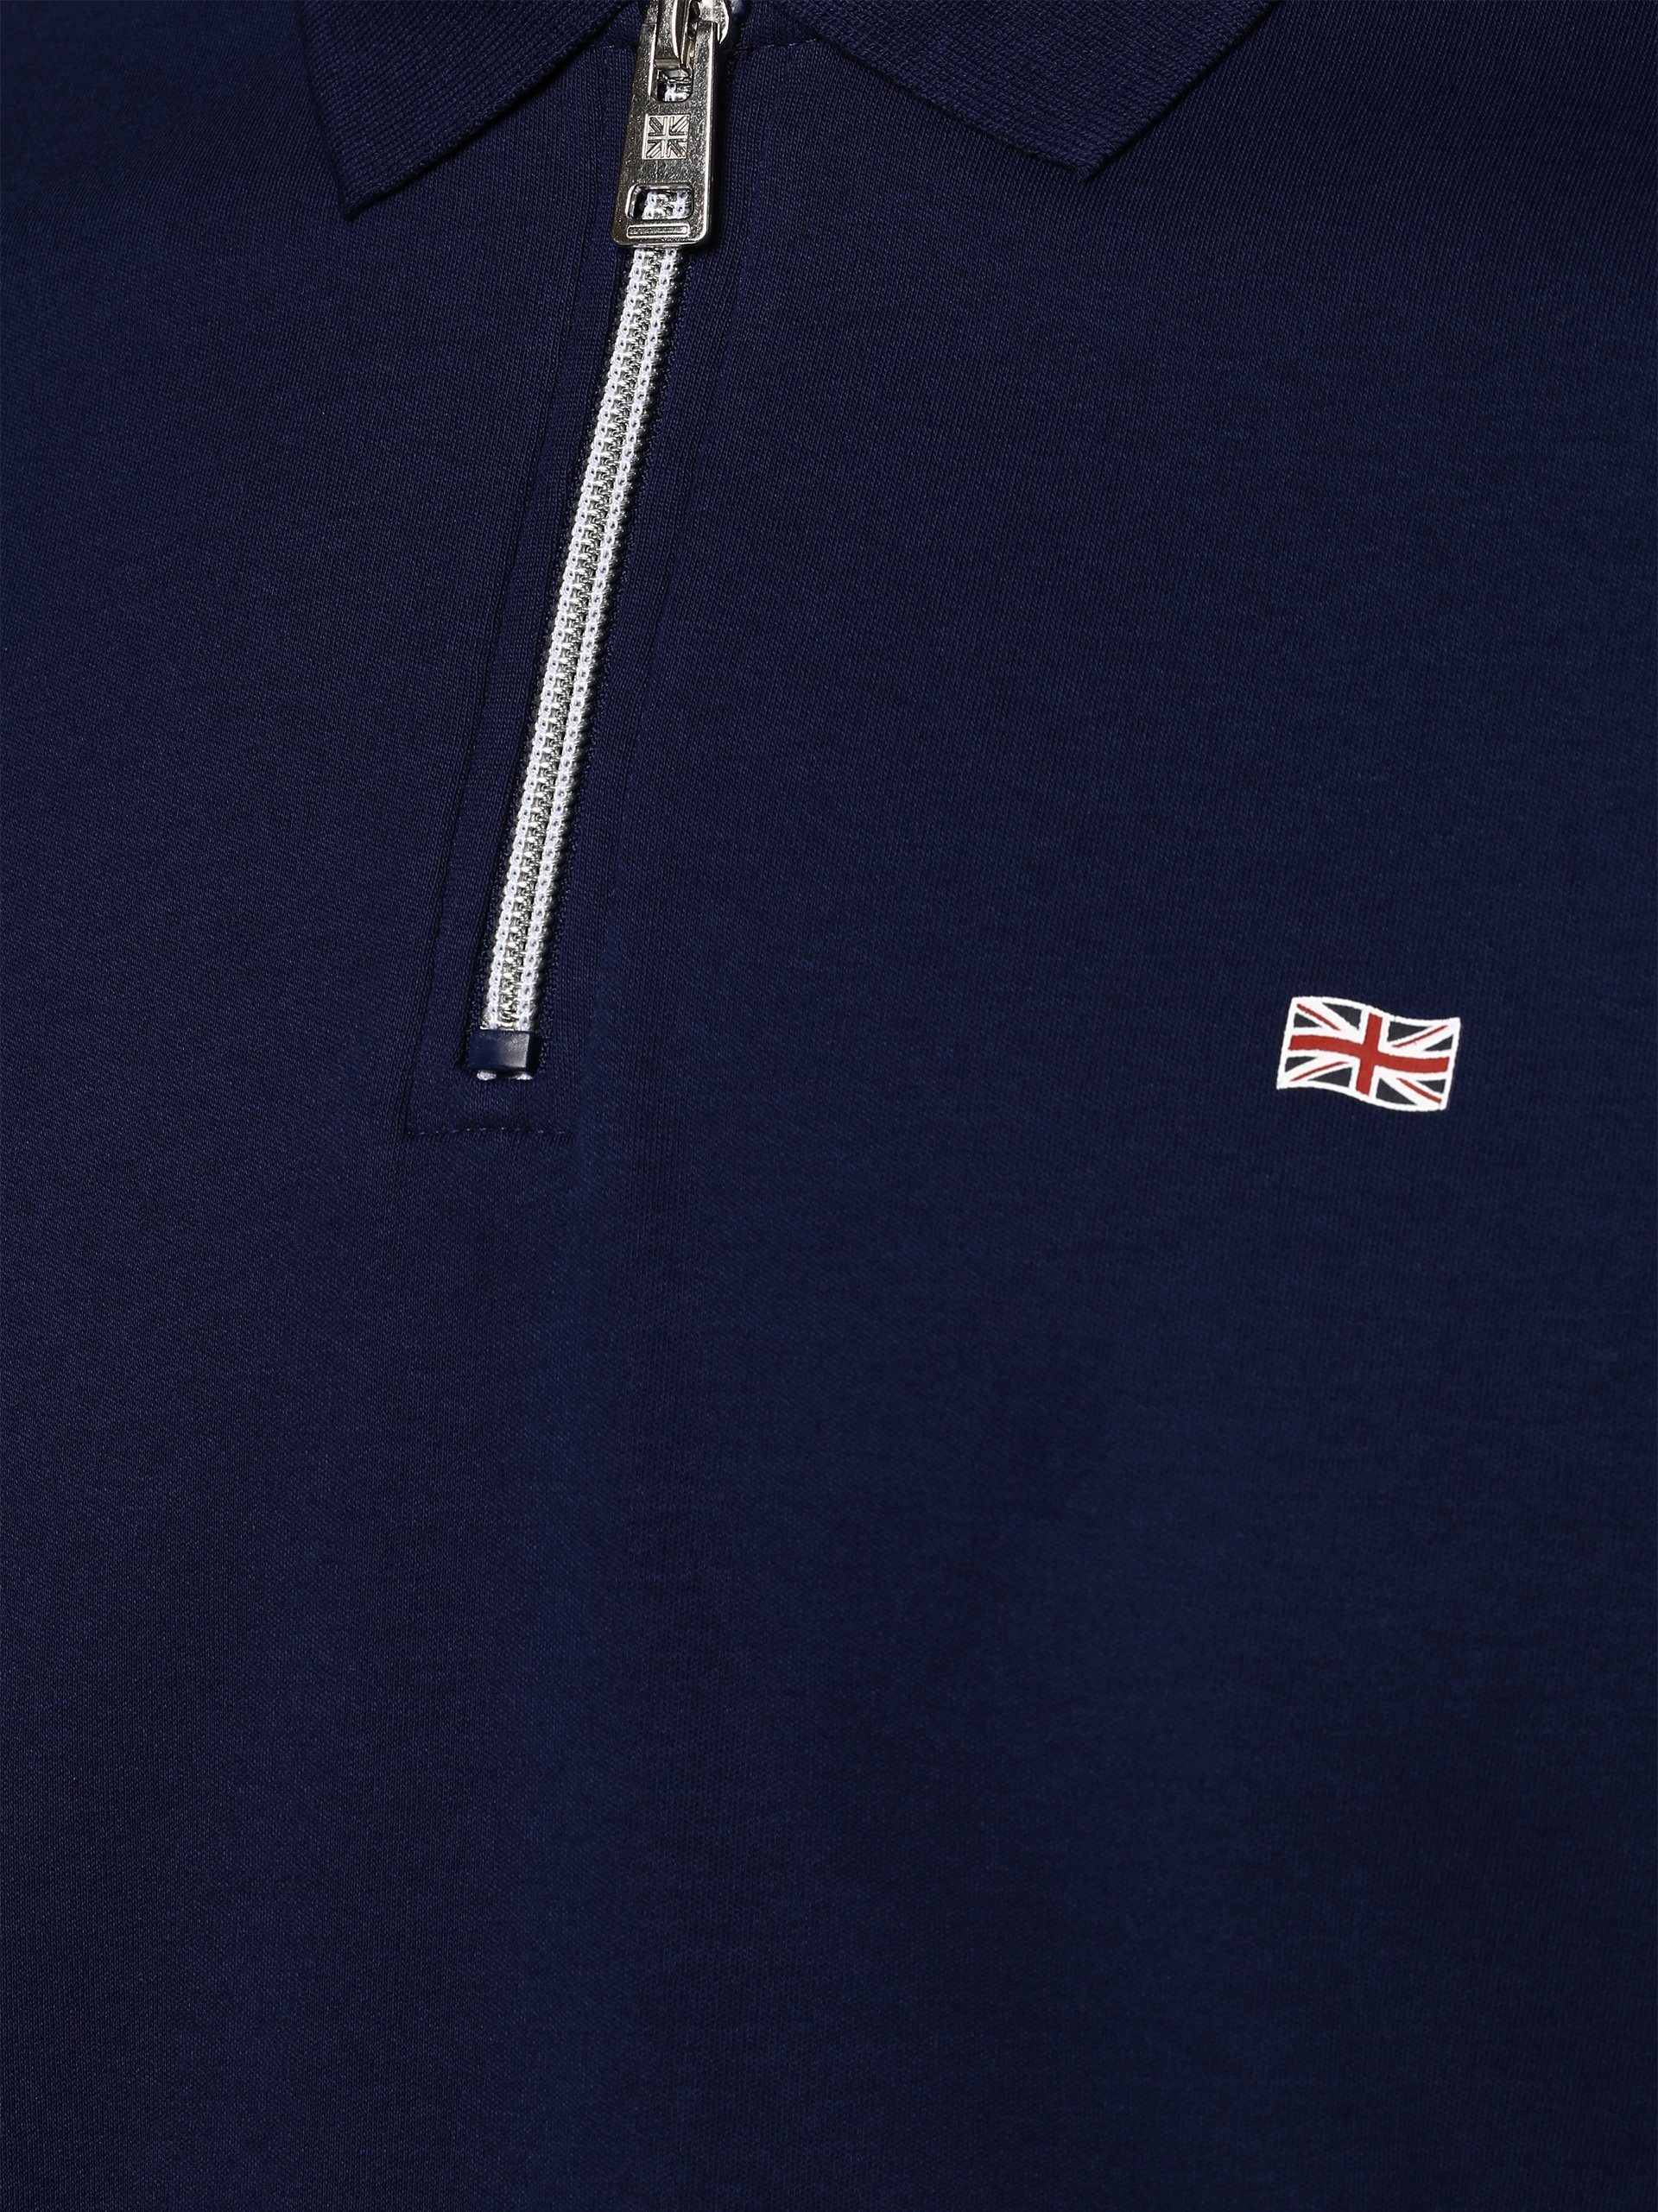 Finshley London & Harding Poloshirt